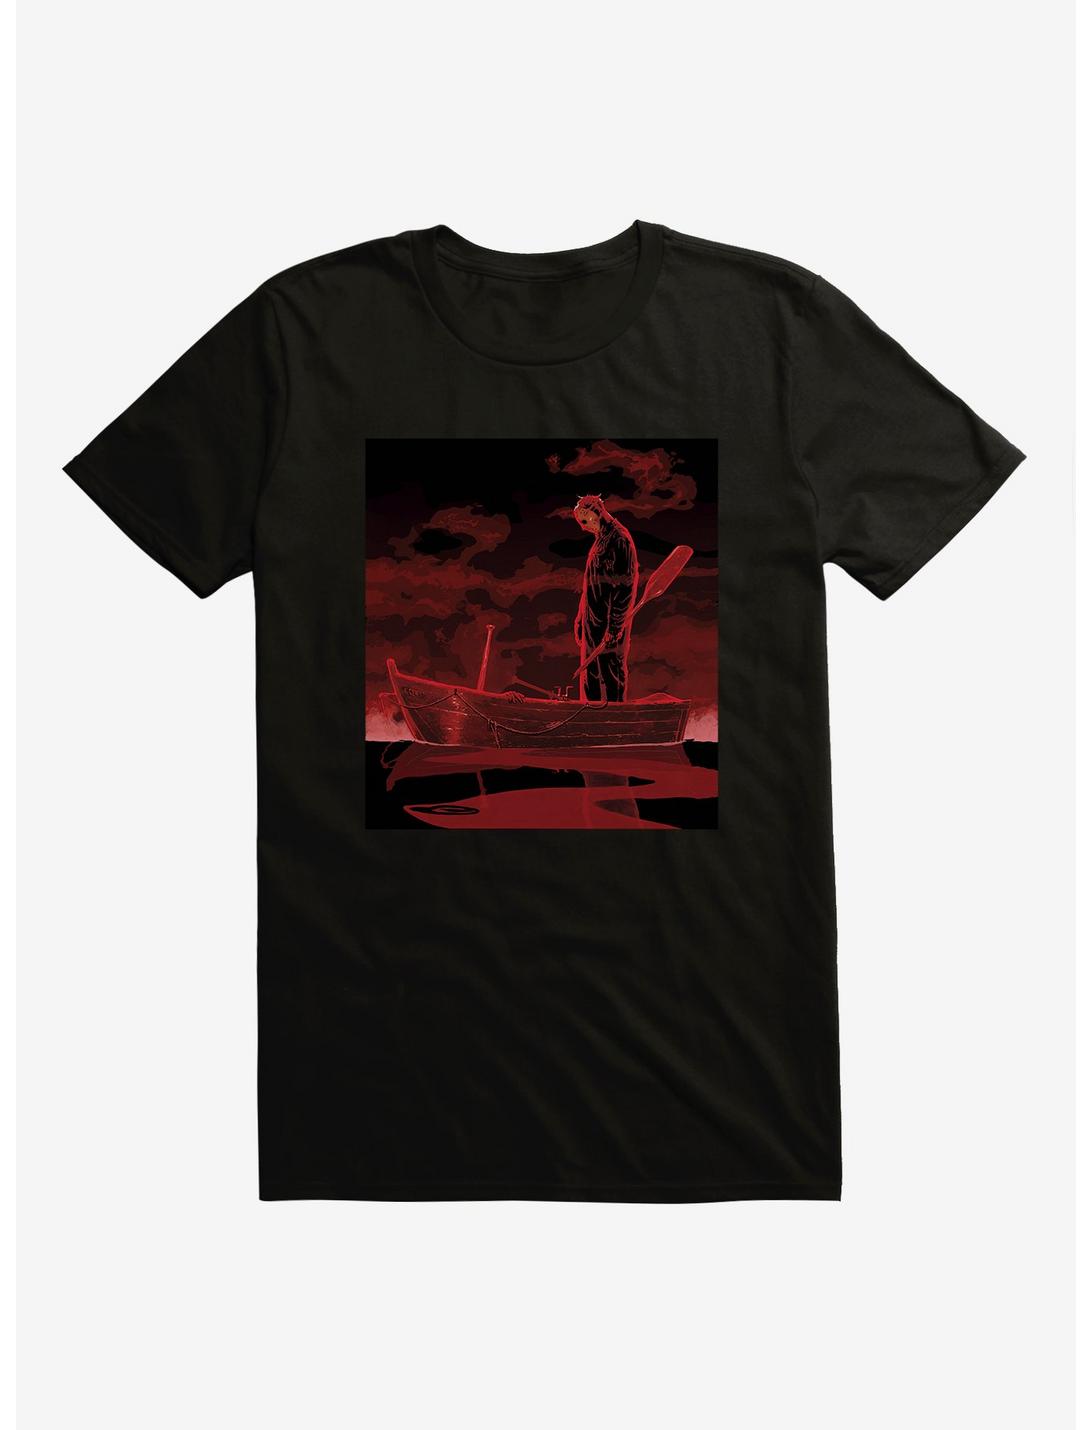 Friday The 13th Jason Boat T-Shirt, BLACK, hi-res